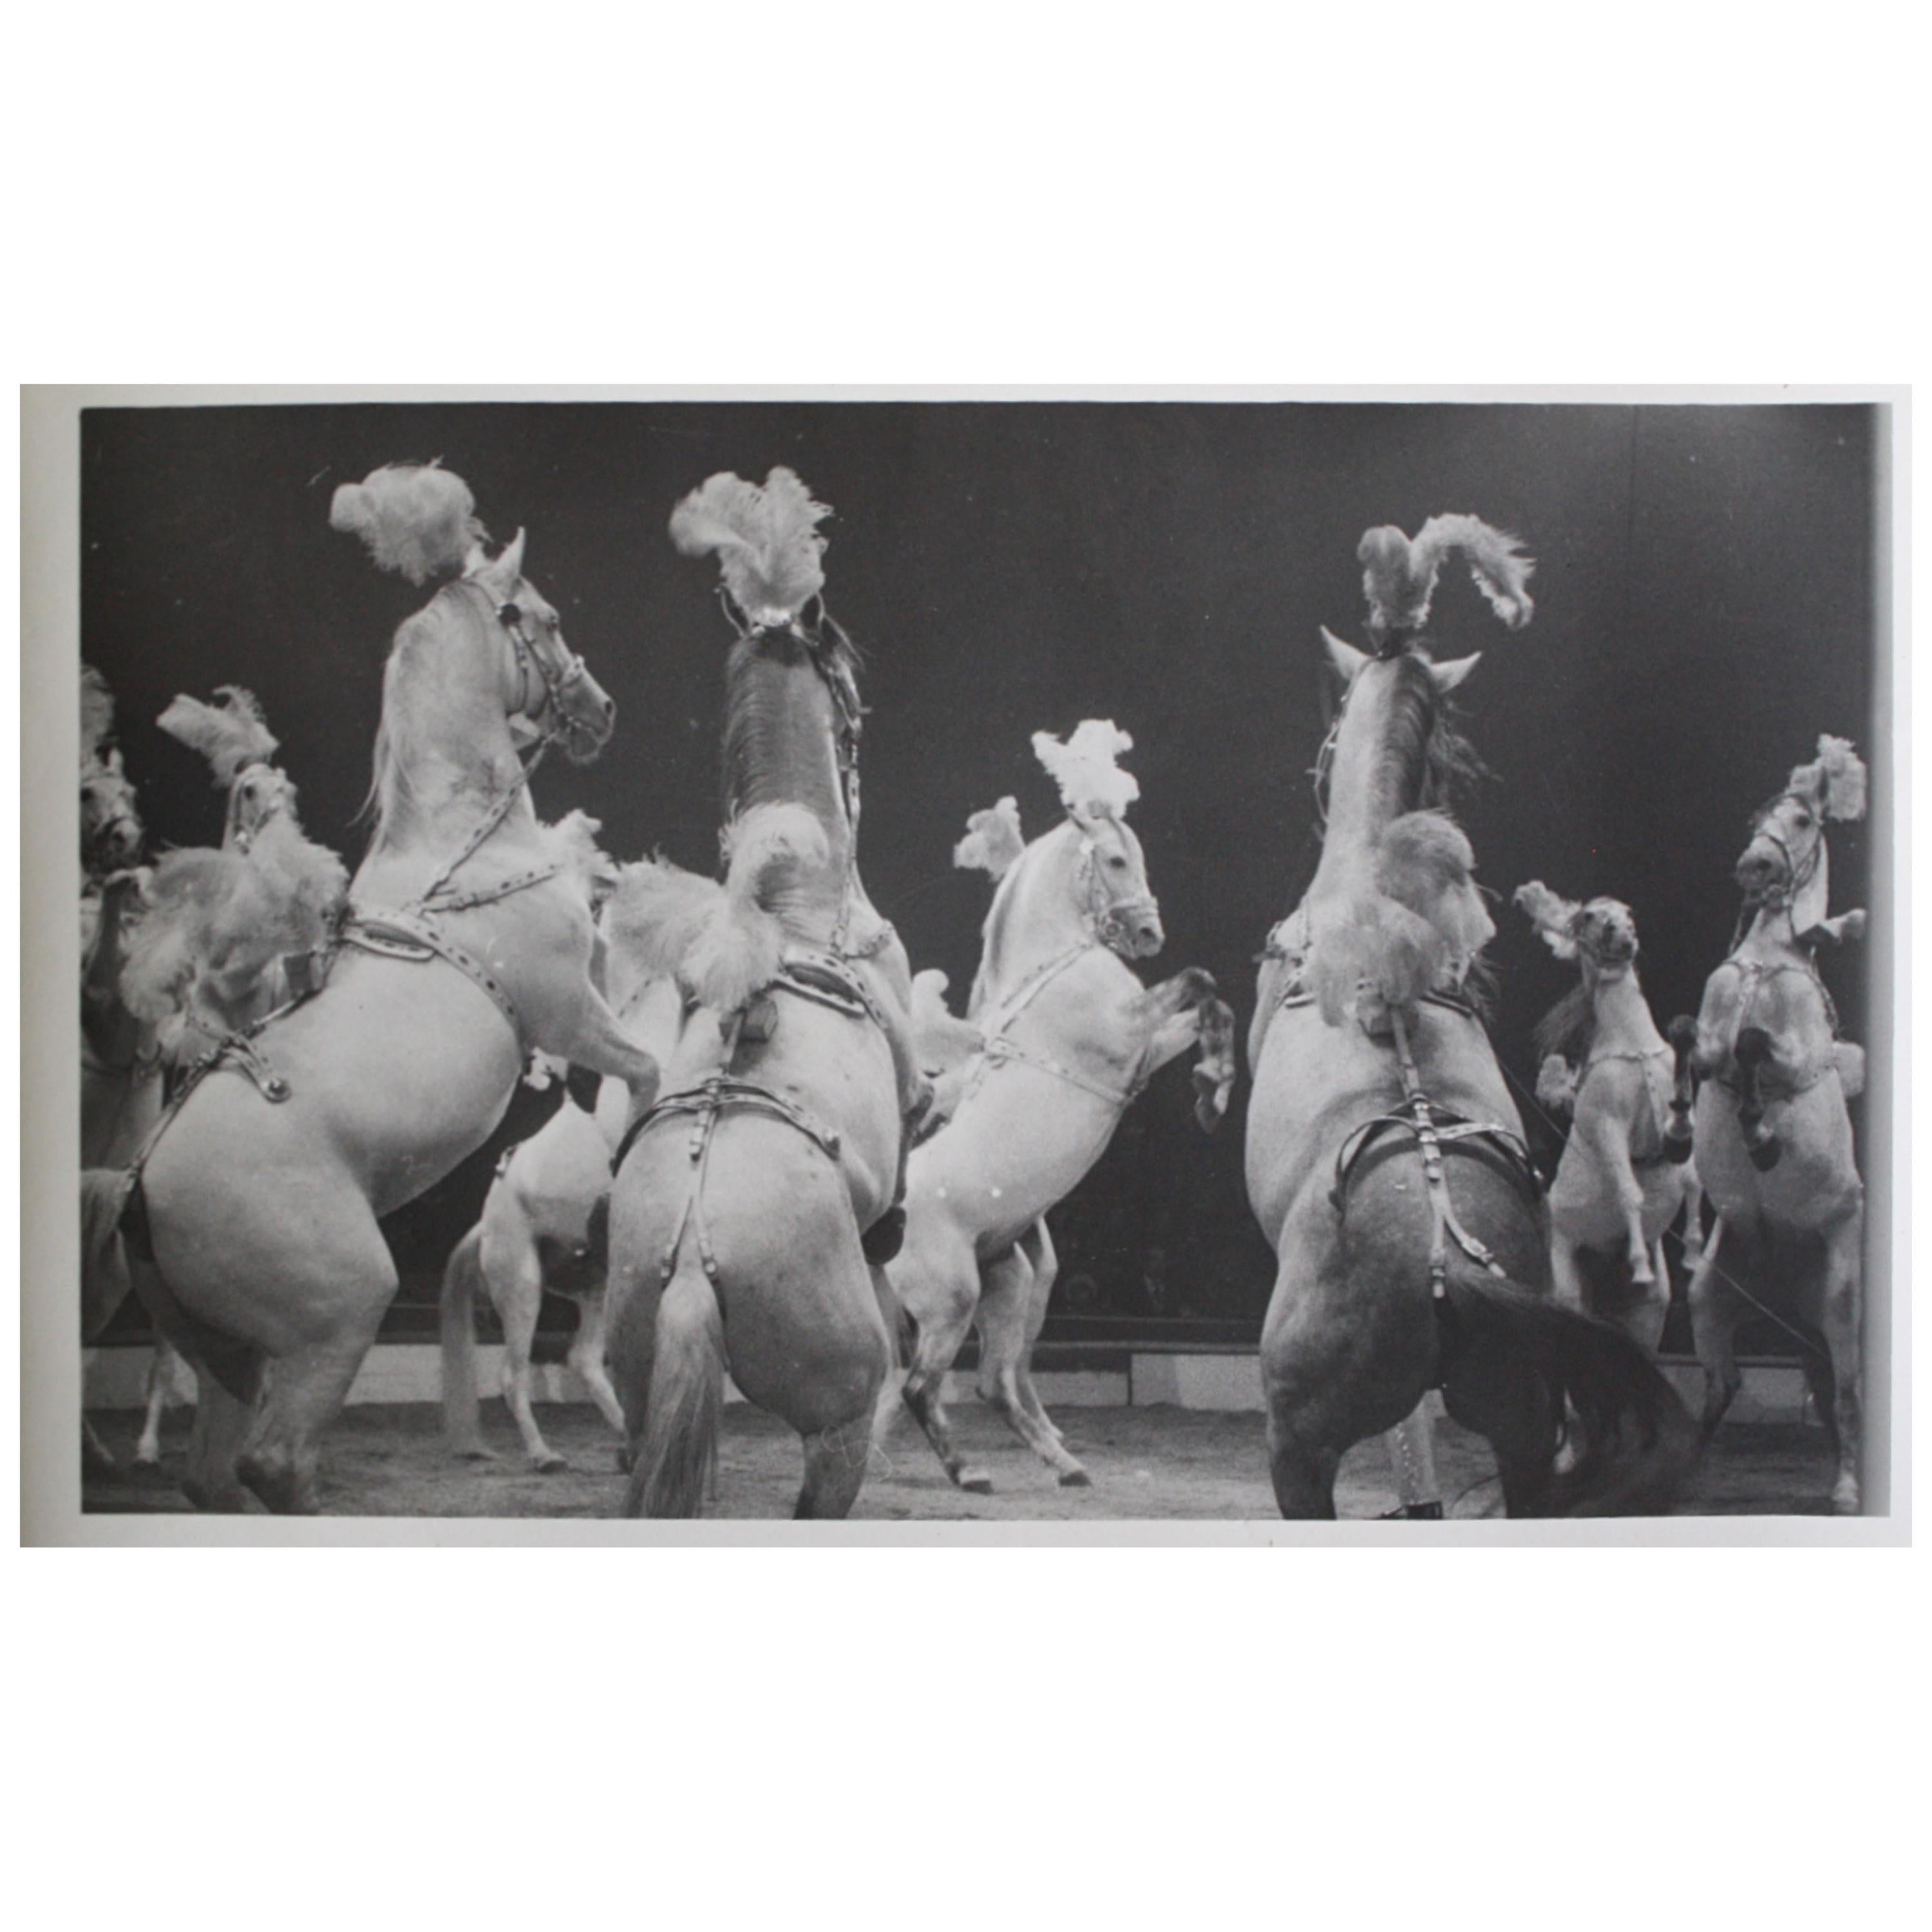 Circus Gelatin Silver Prints Photography in the Manner of Kurt Hutton circa 1940